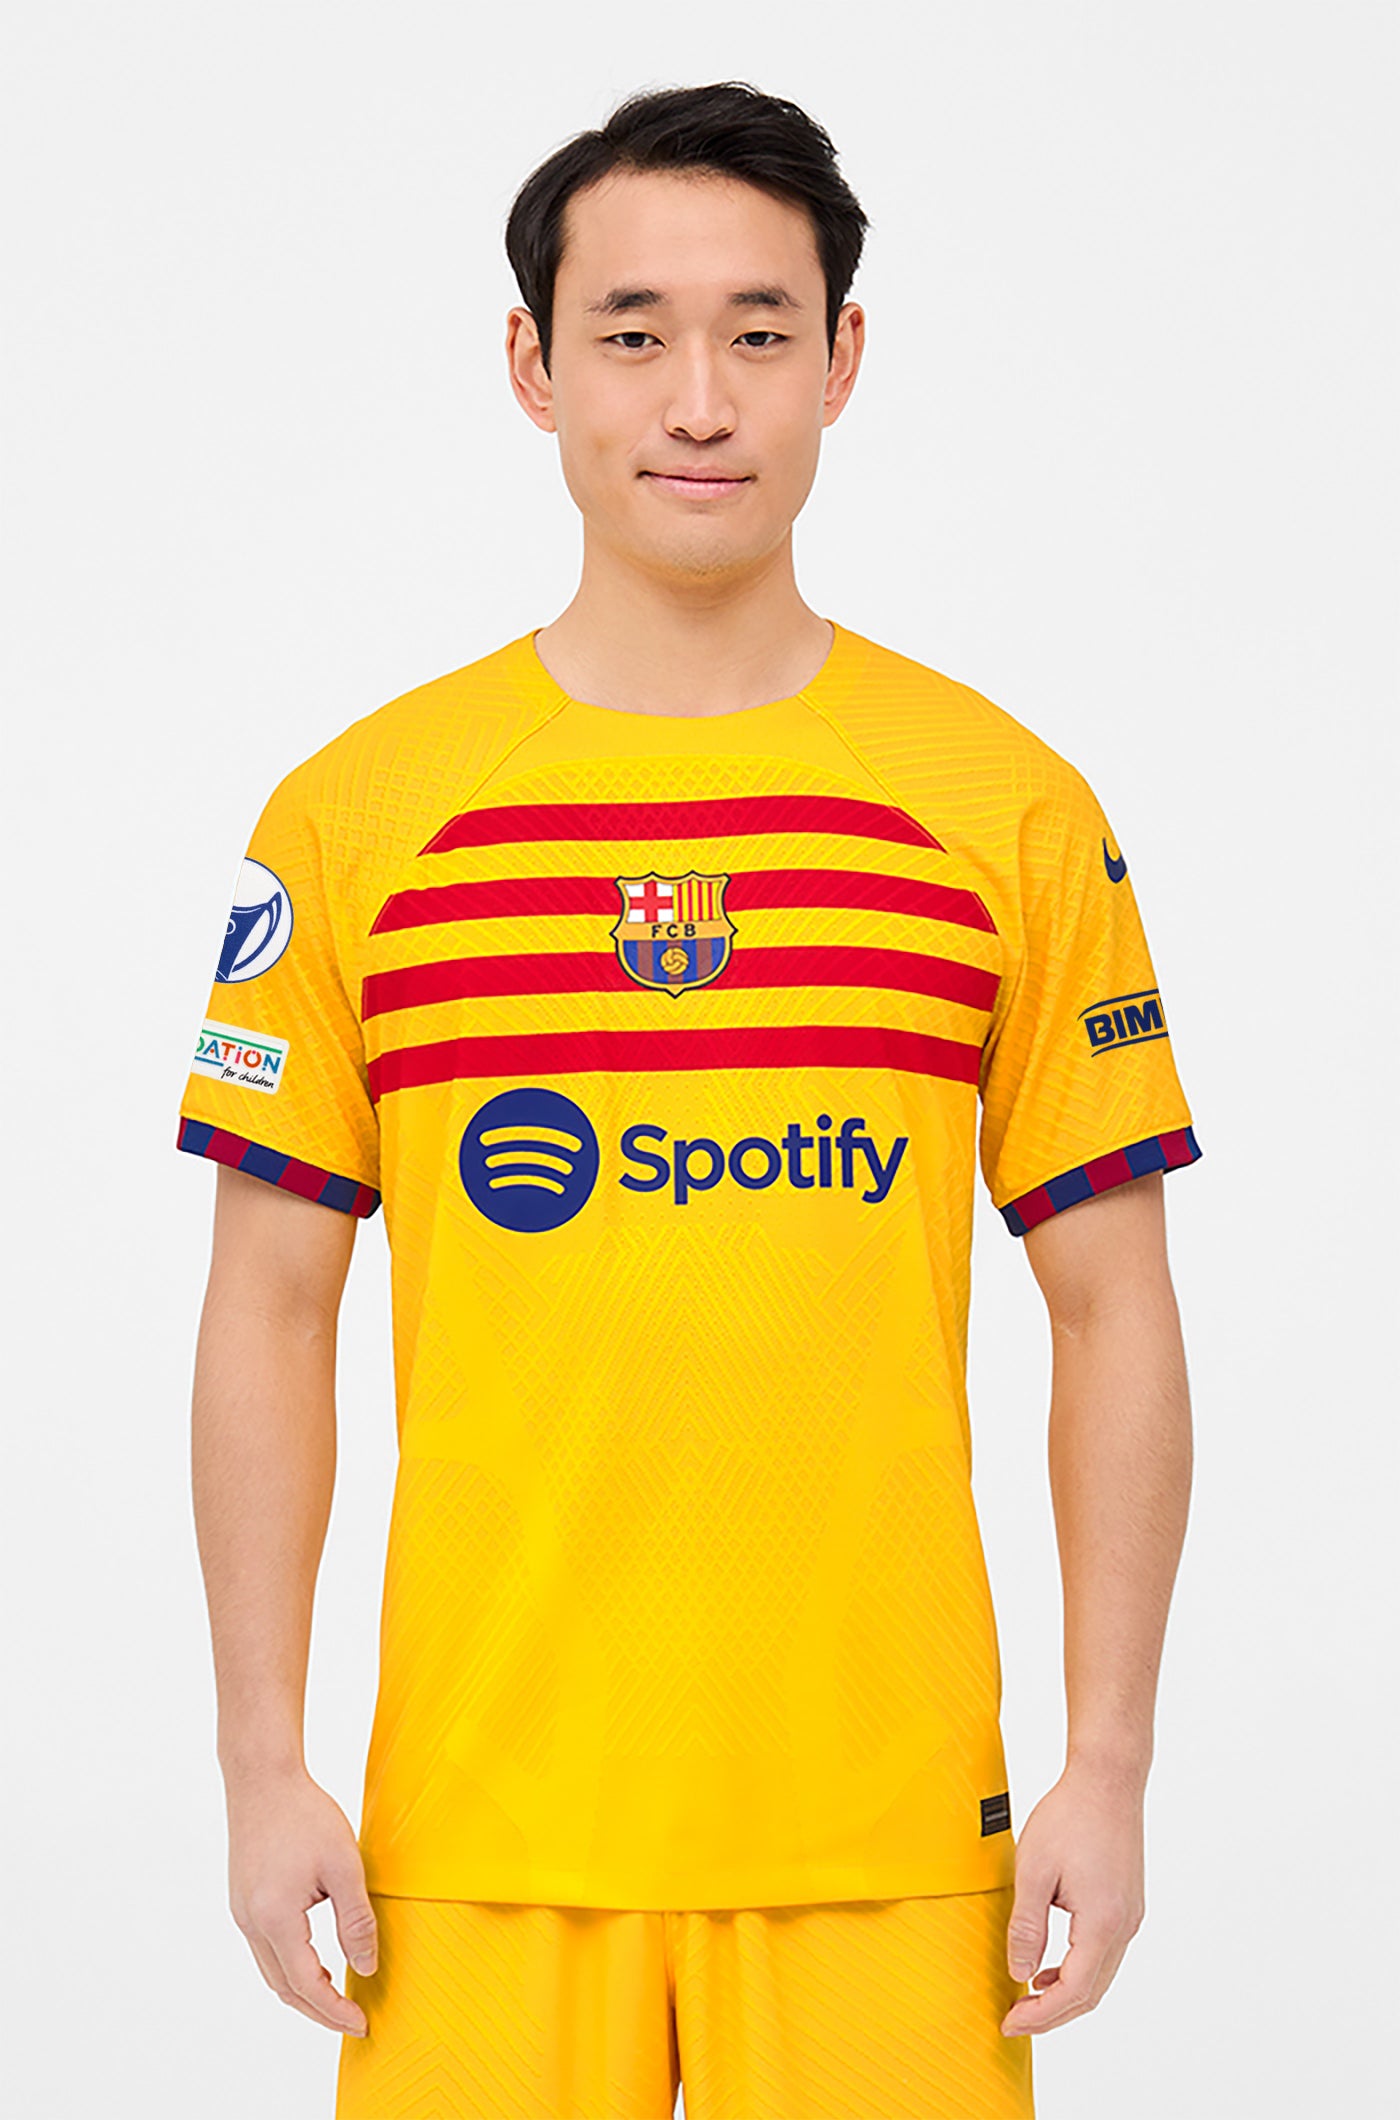 UWCL FC Barcelona fourth shirt 23/24 Player's Edition - PINA